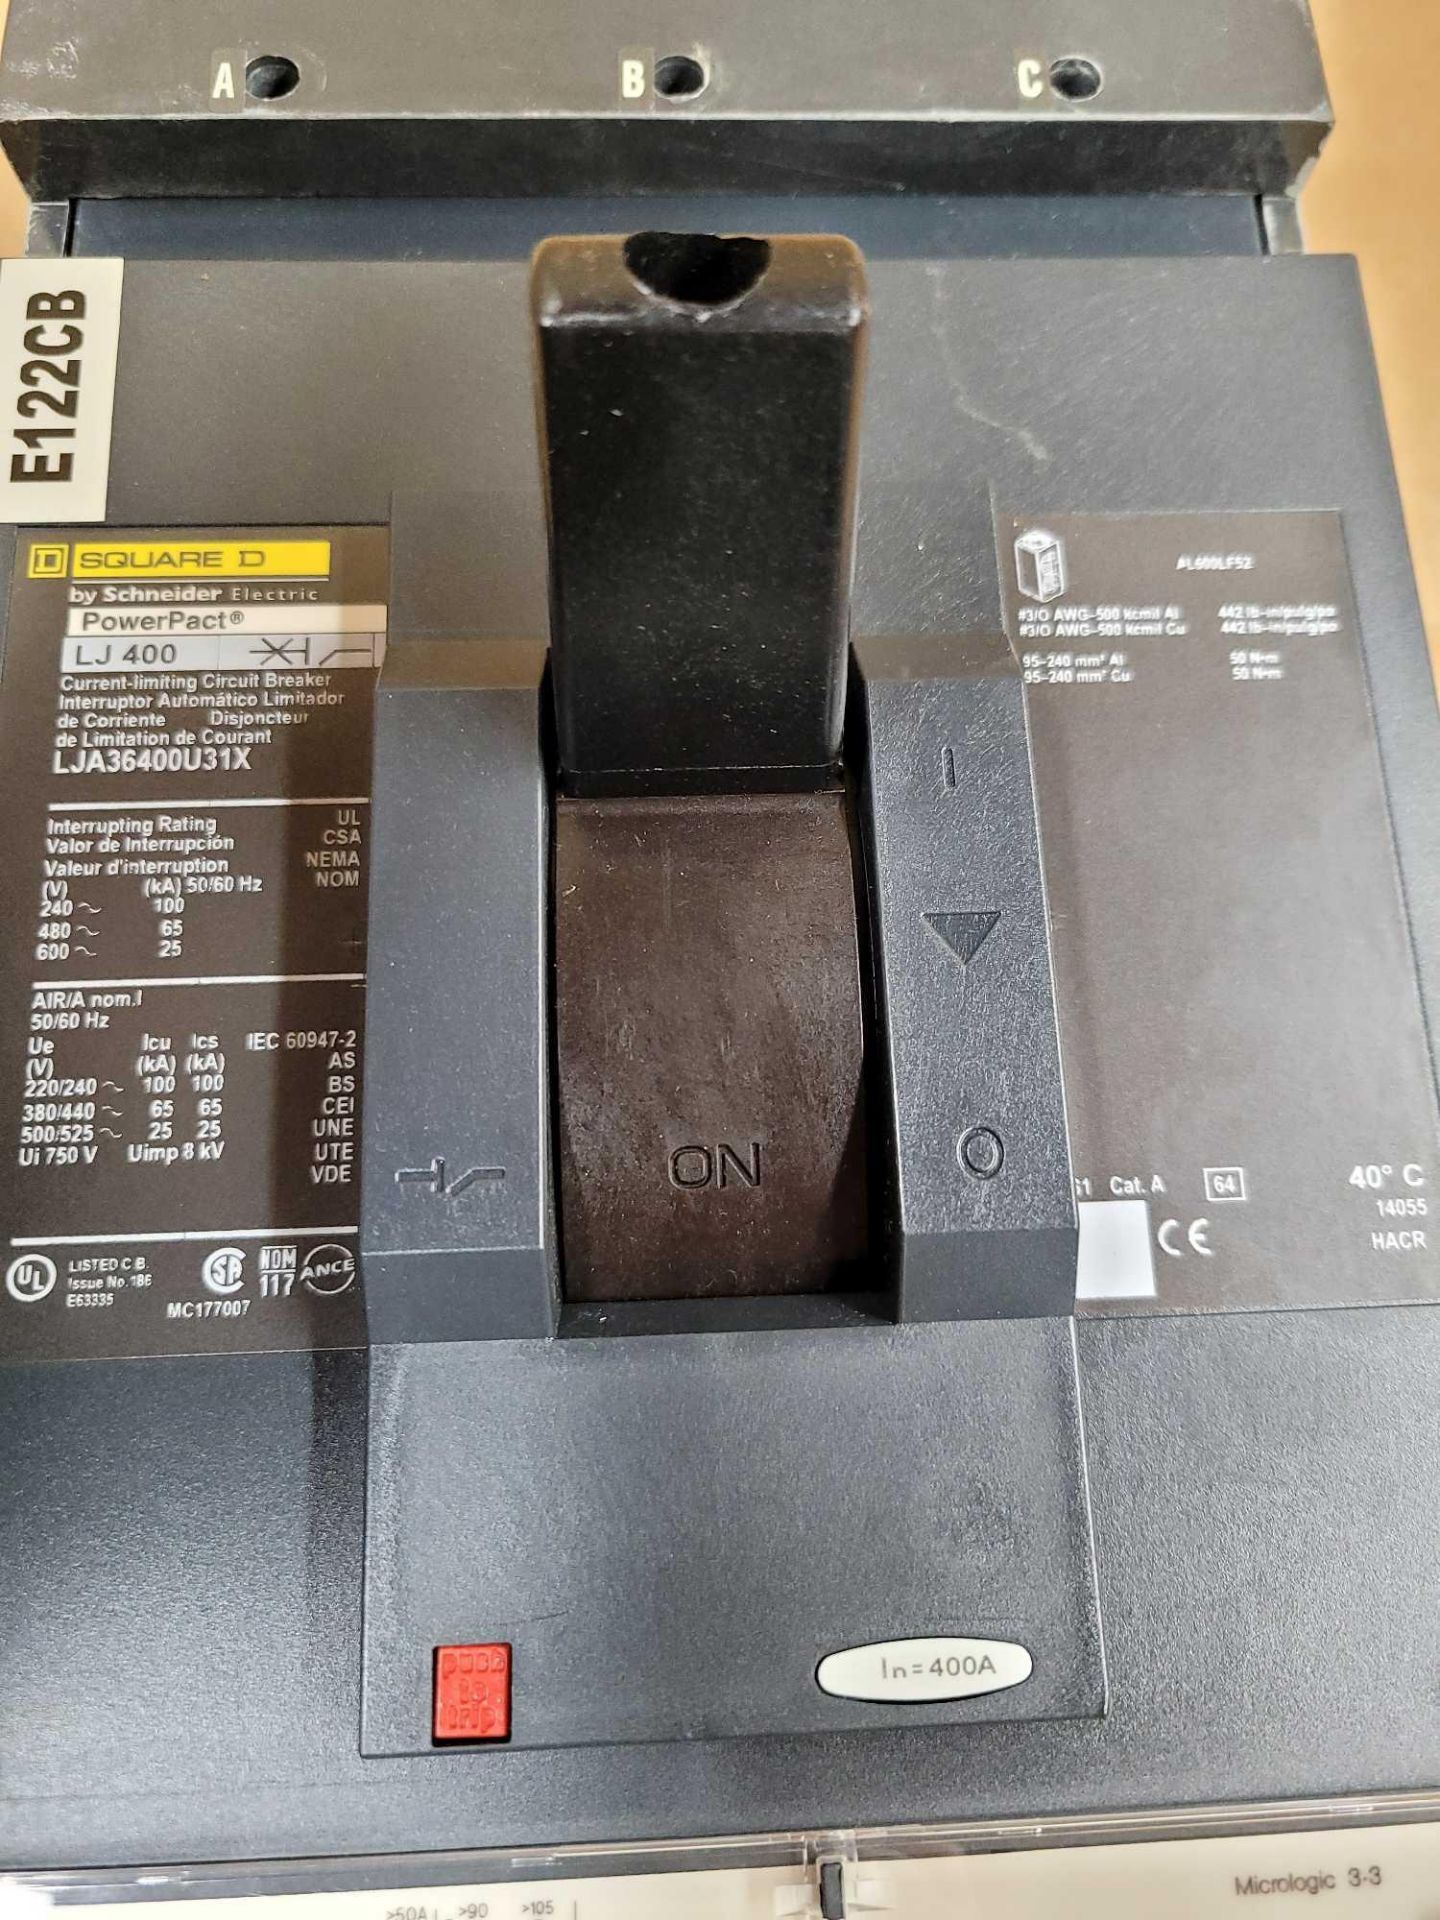 SQUARE D LJA36400U31X / 400 Amp Molded Case Circuit Breaker  /  Lot Weight: 16.6 lbs - Image 2 of 6